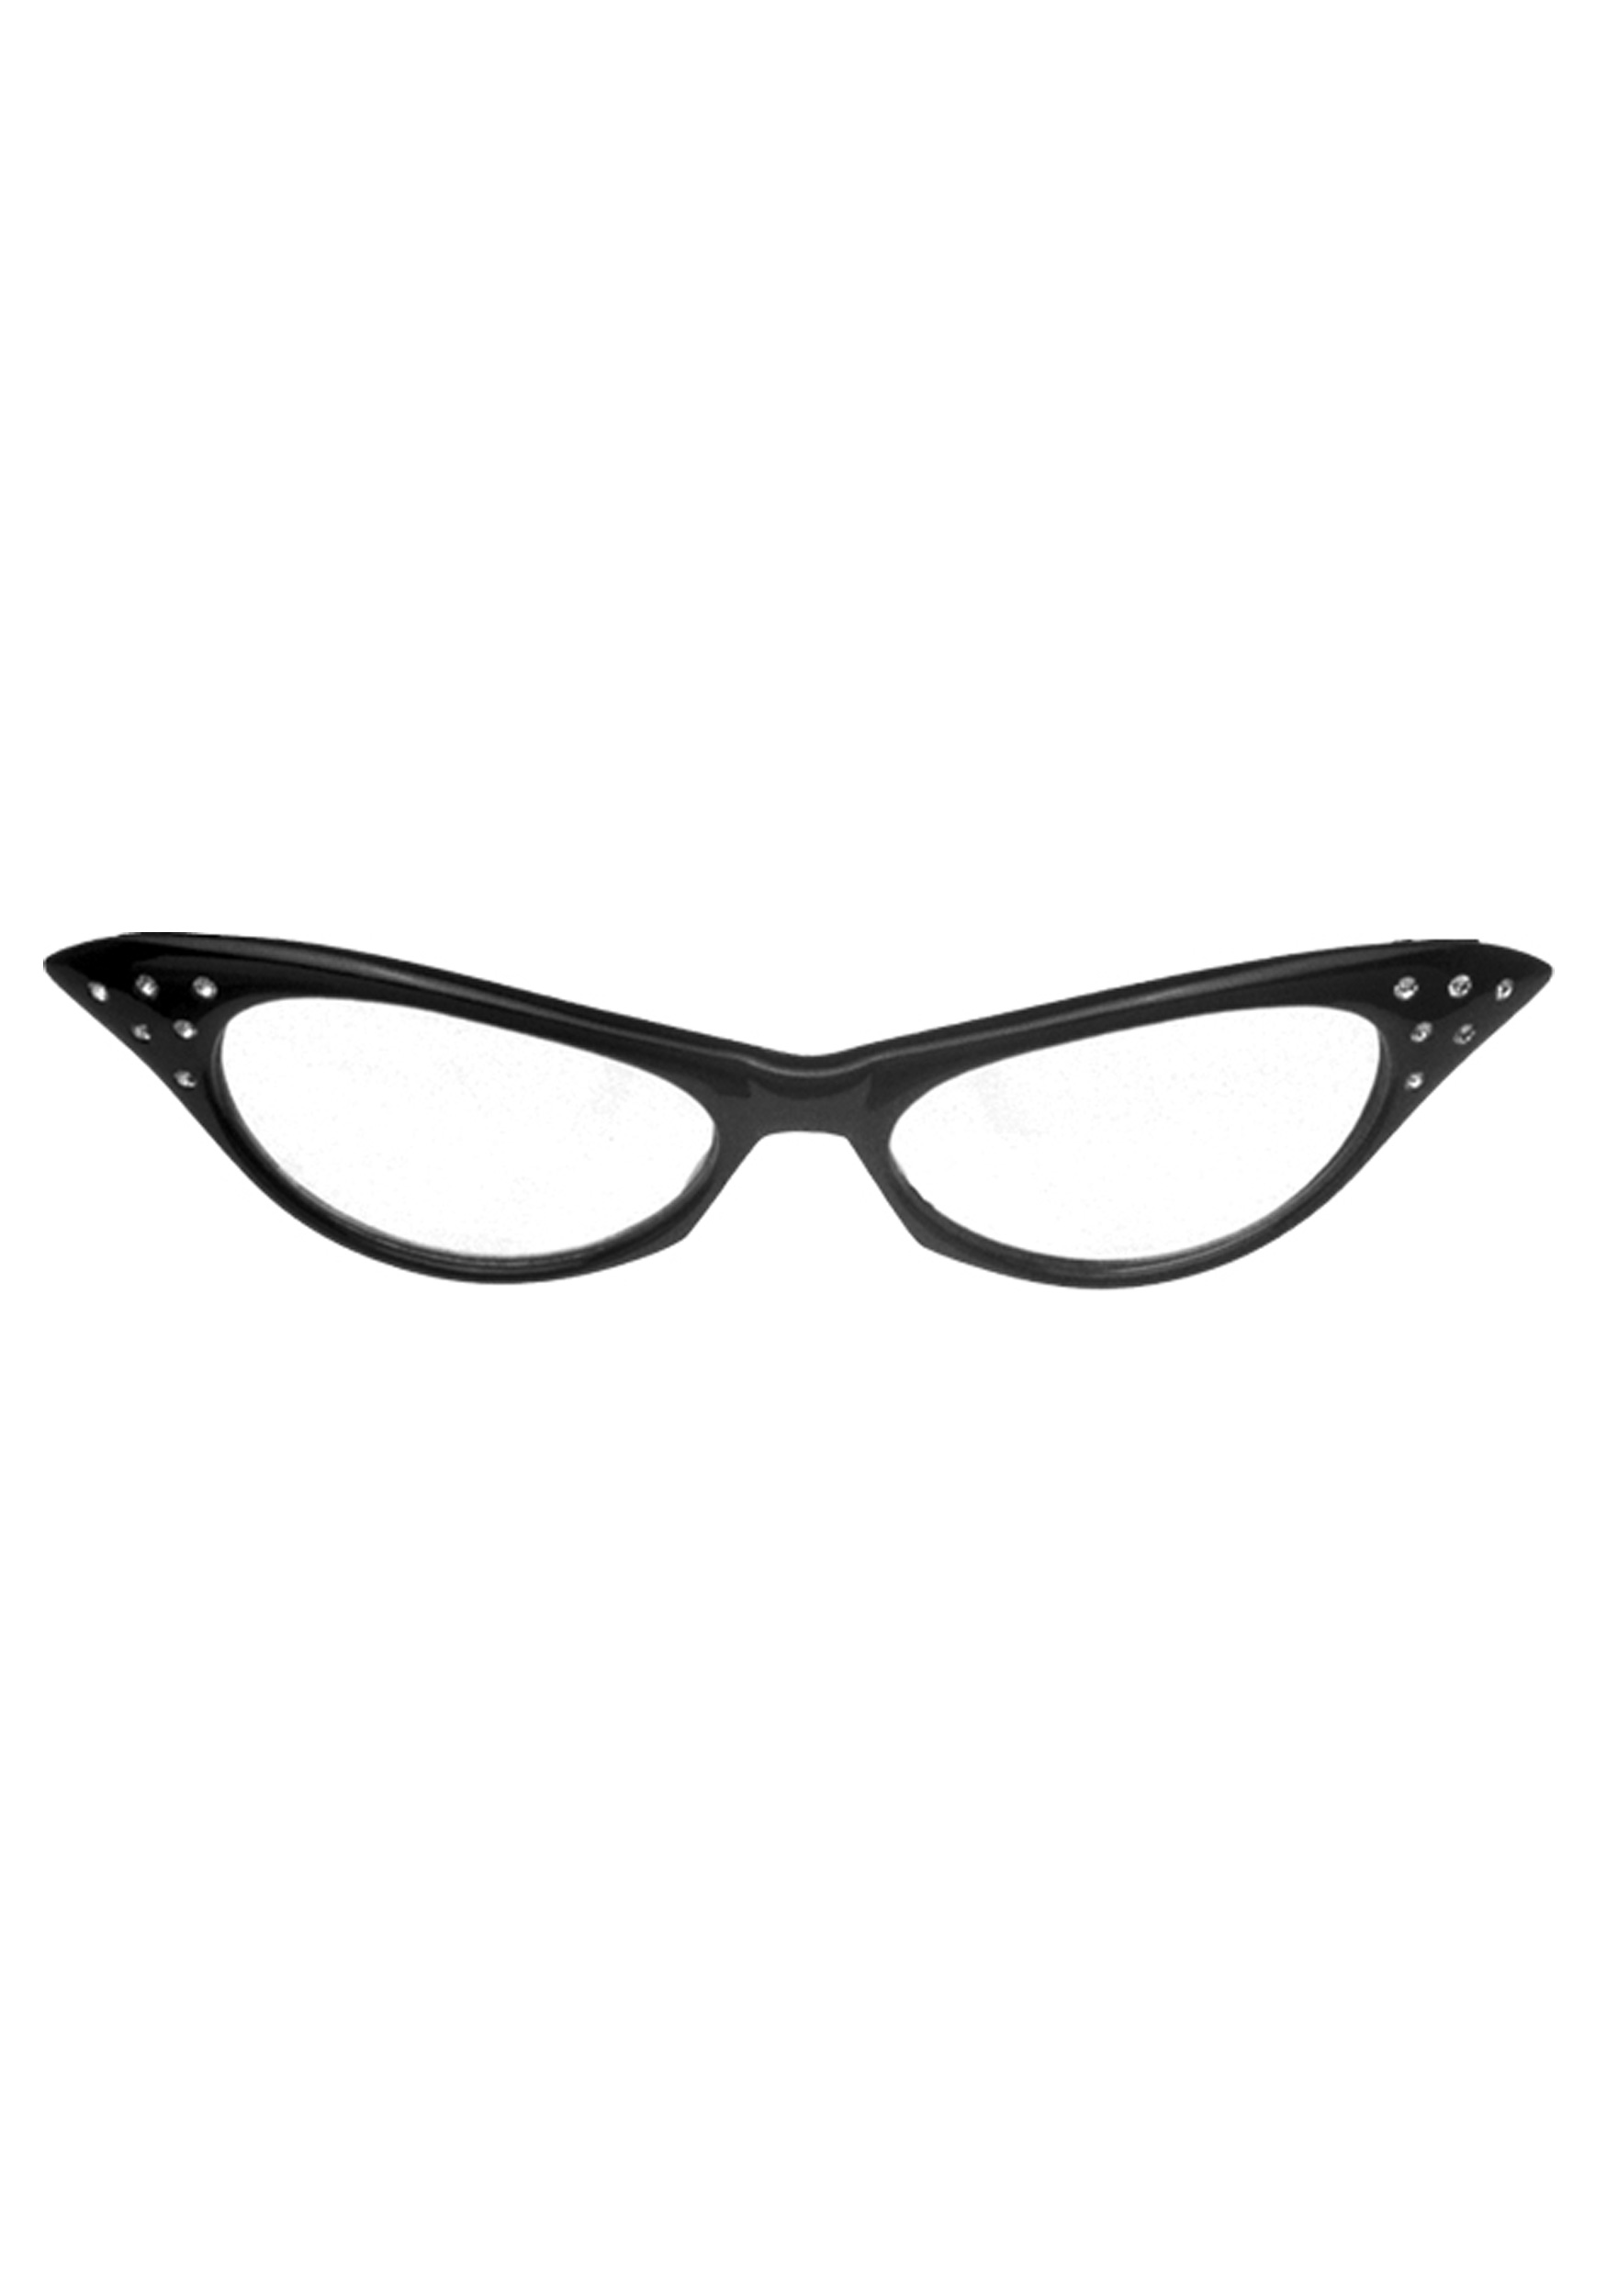 S Black Frame Glasses Zoom image - vector clip art online, royalty ...